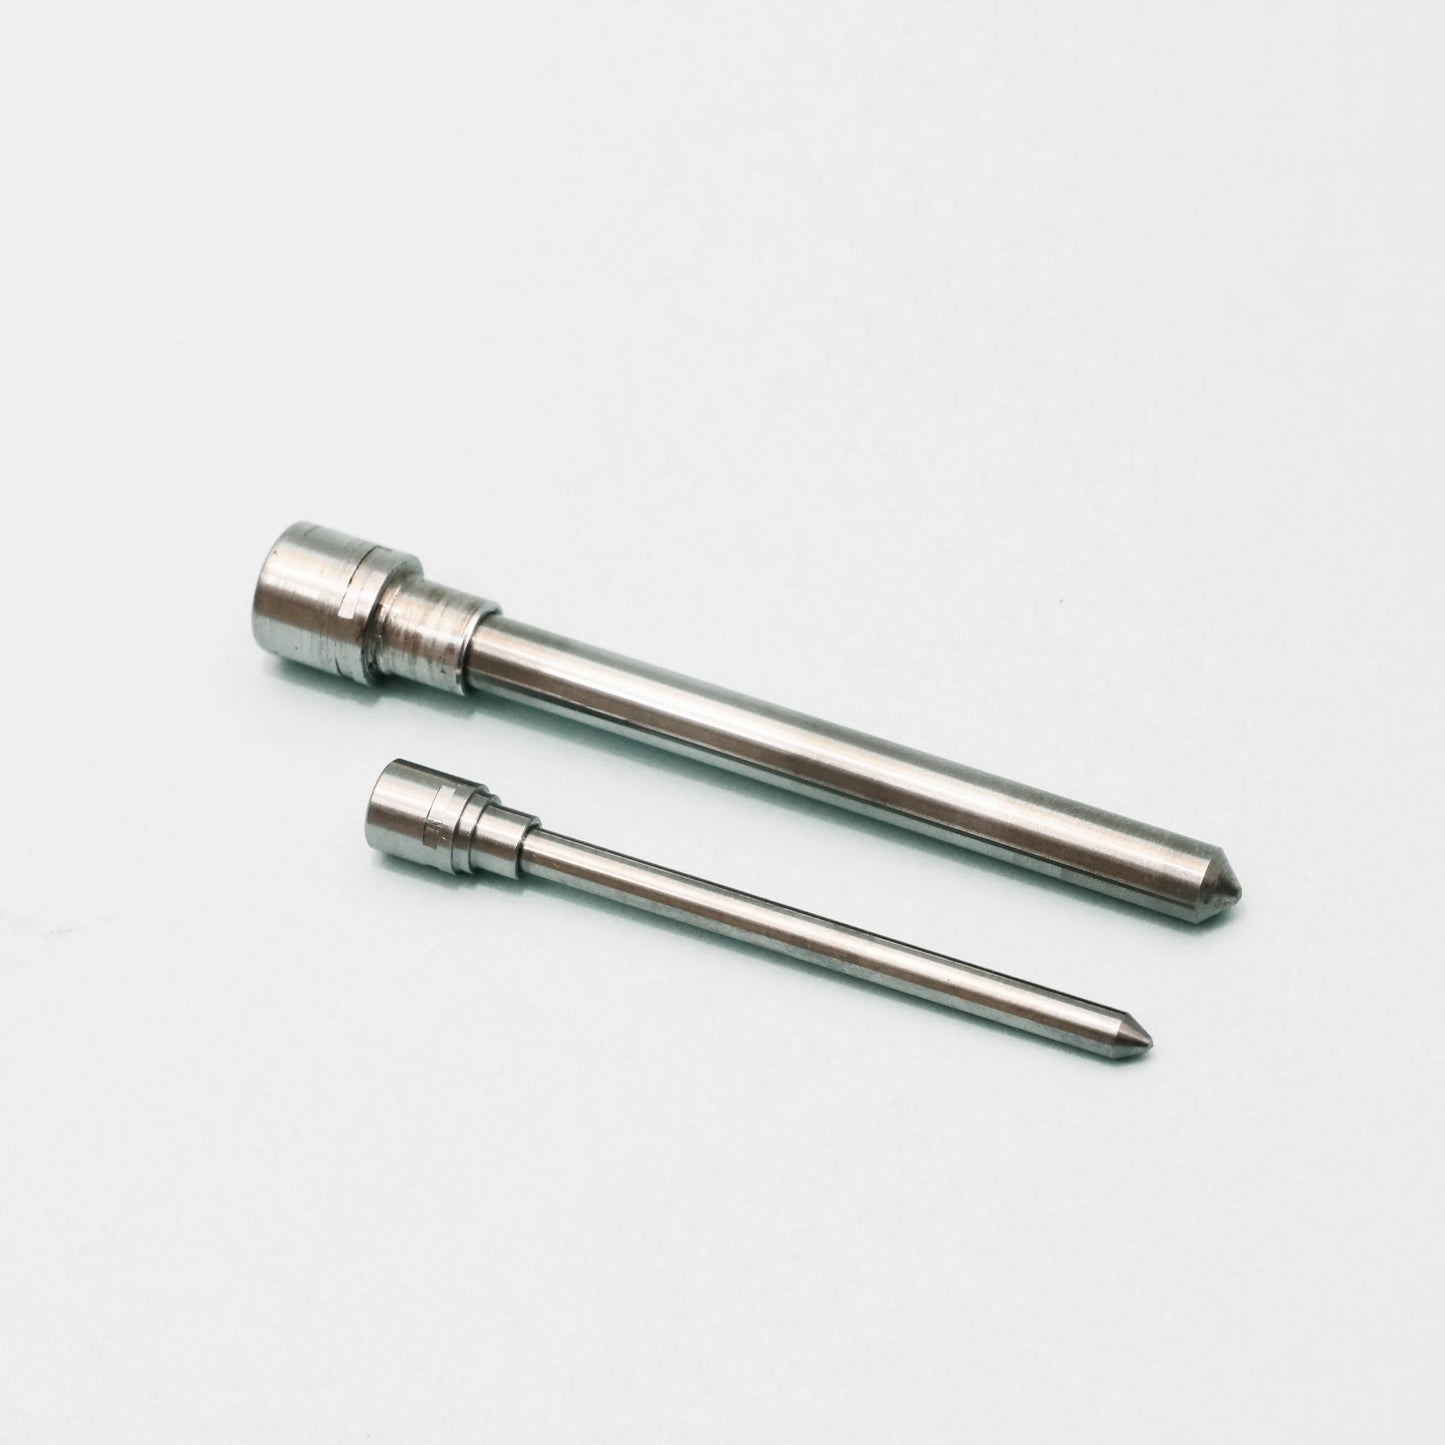 BSD Carbide Pin - 120° Tip angle, Standard Length